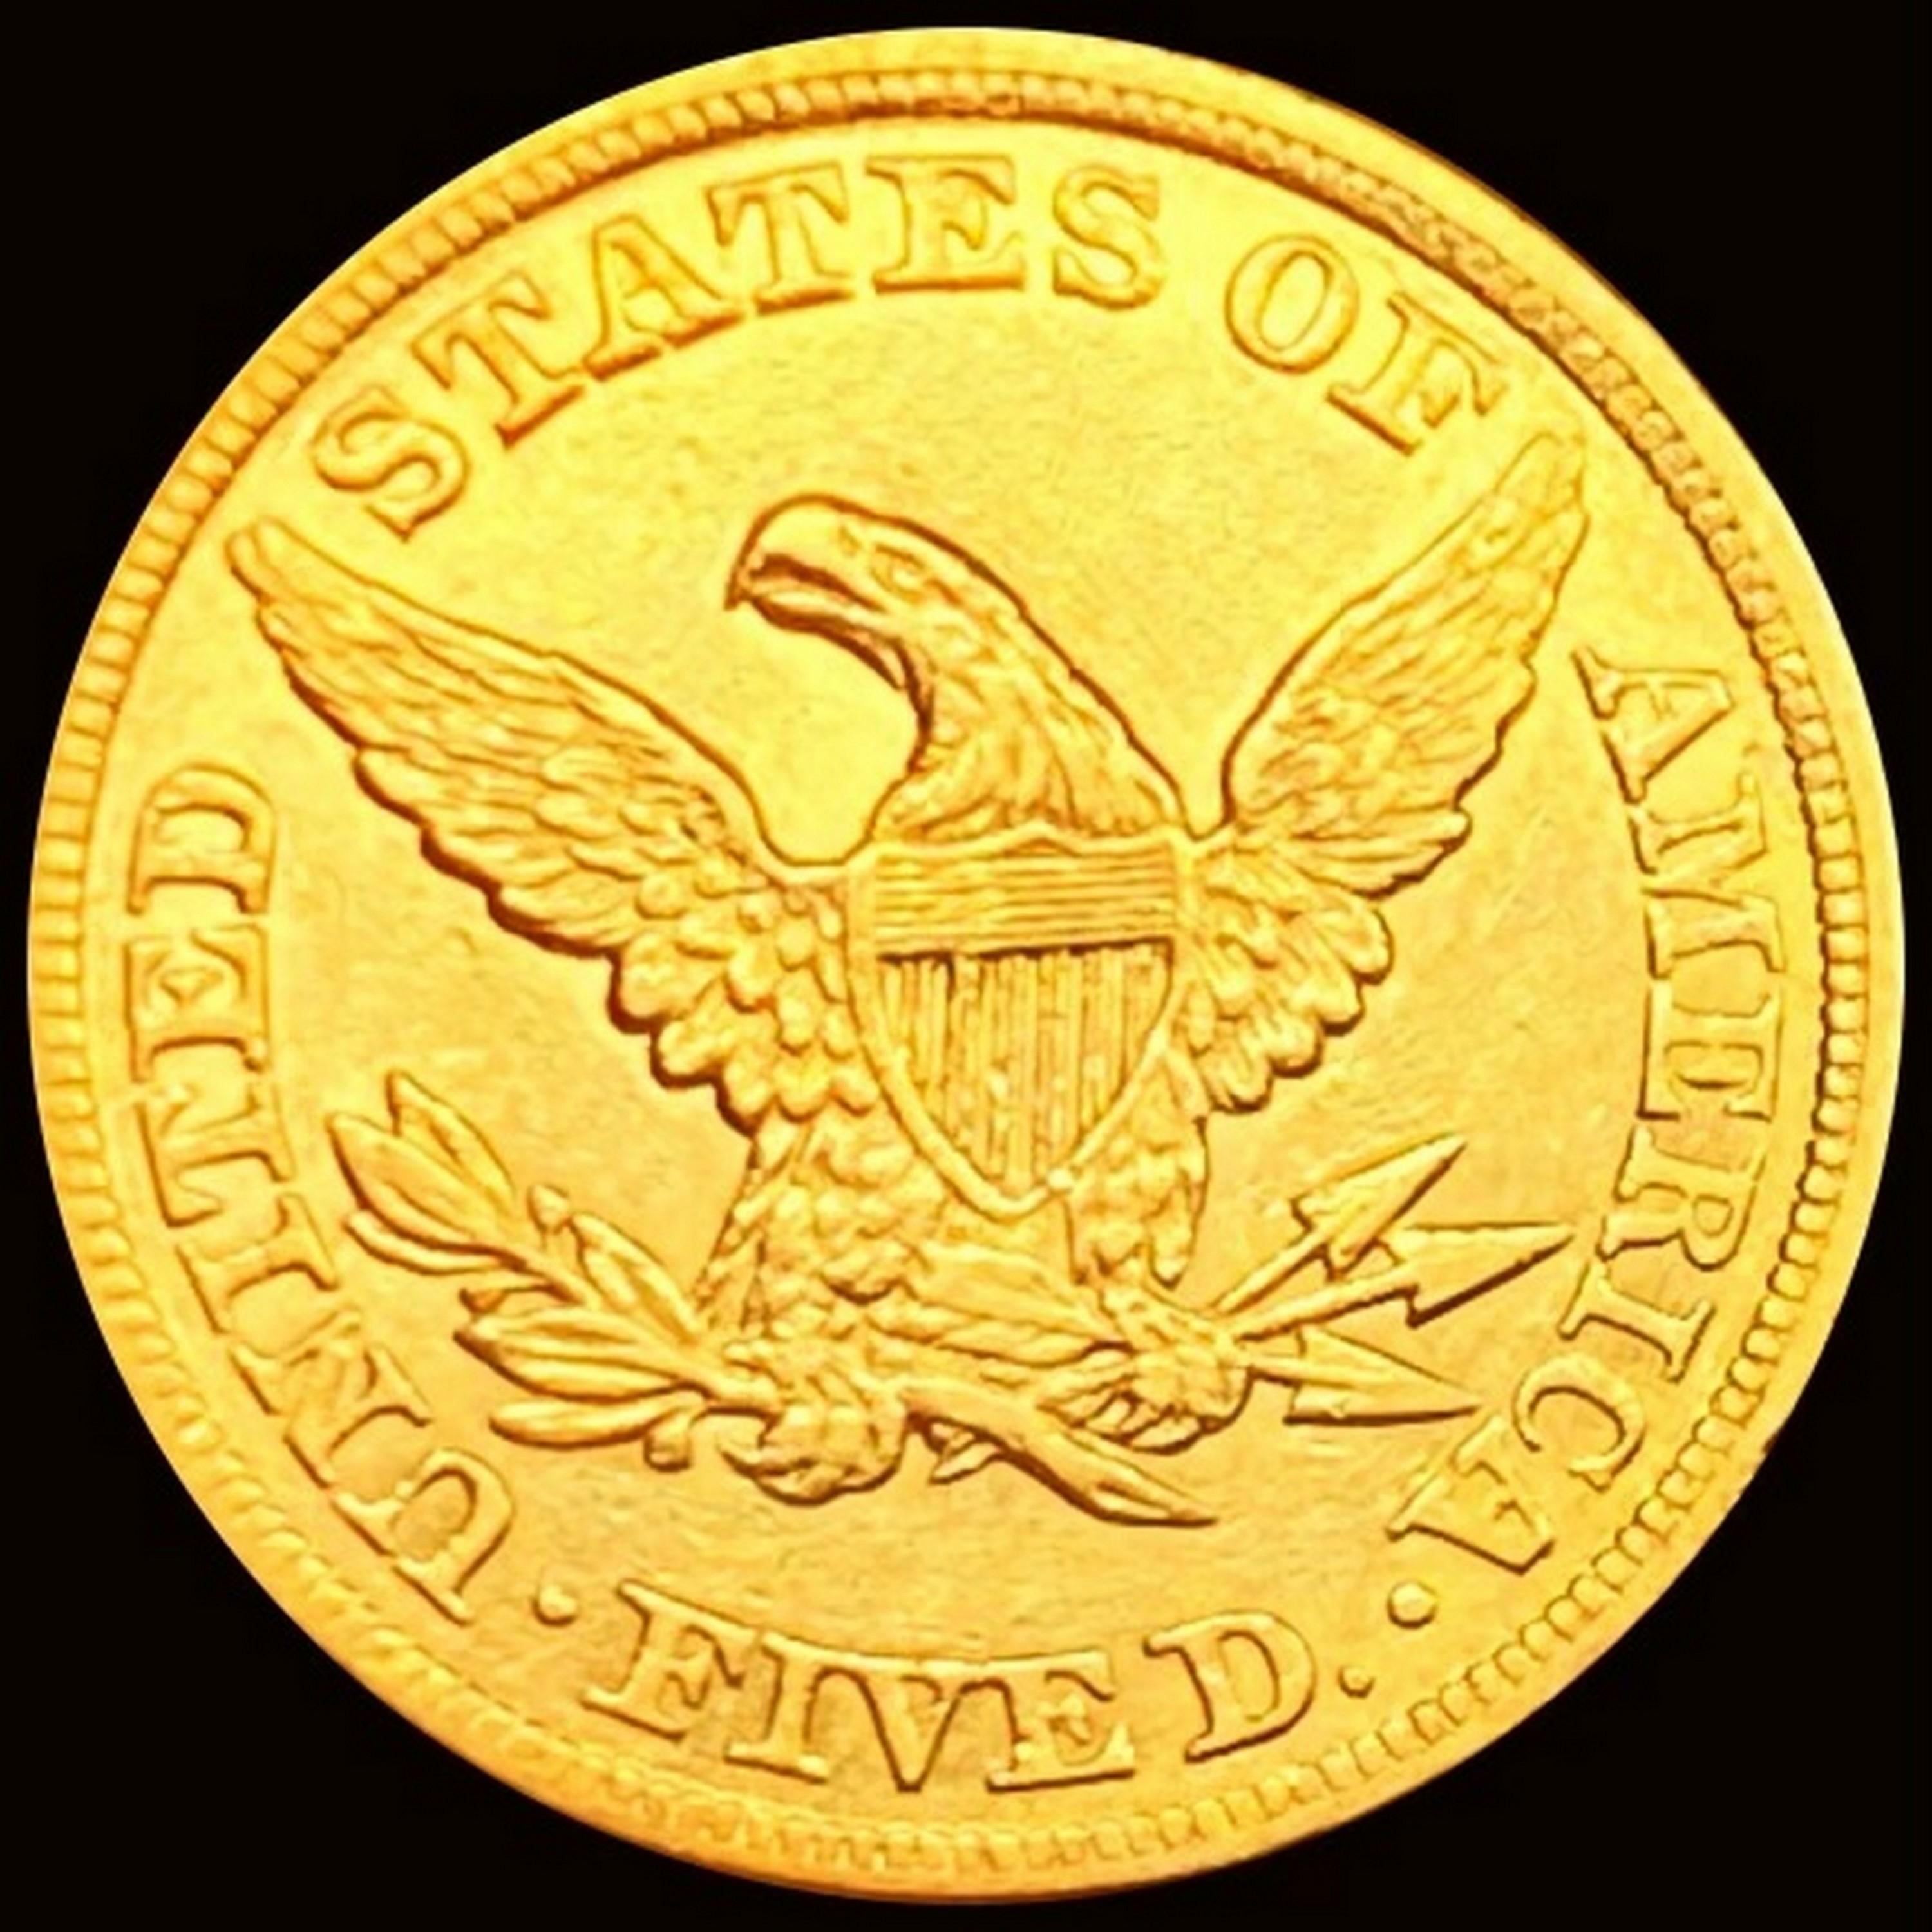 1856 $5 Gold Half Eagle UNCIRCULATED